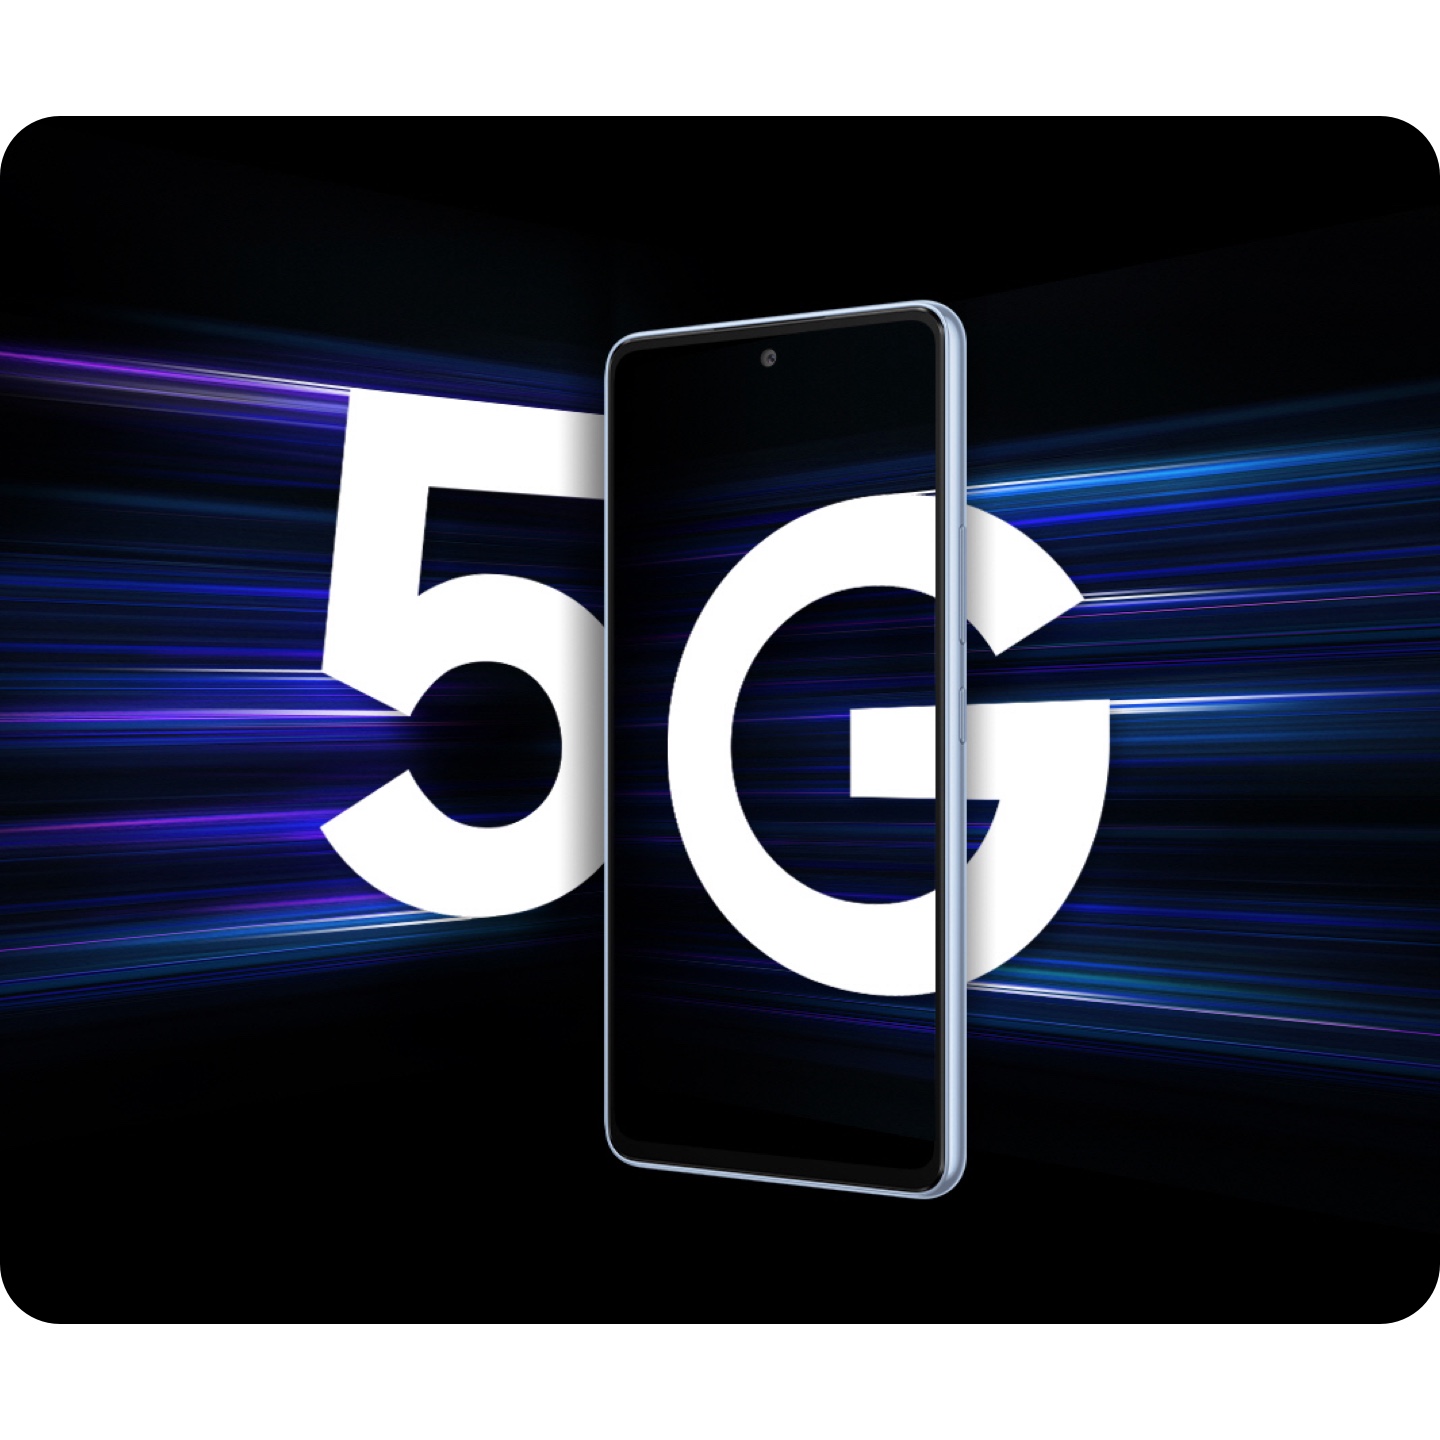 SM-A536UZKDXAA | Galaxy A53 5G 128GB, Black (Unlocked) | Samsung 